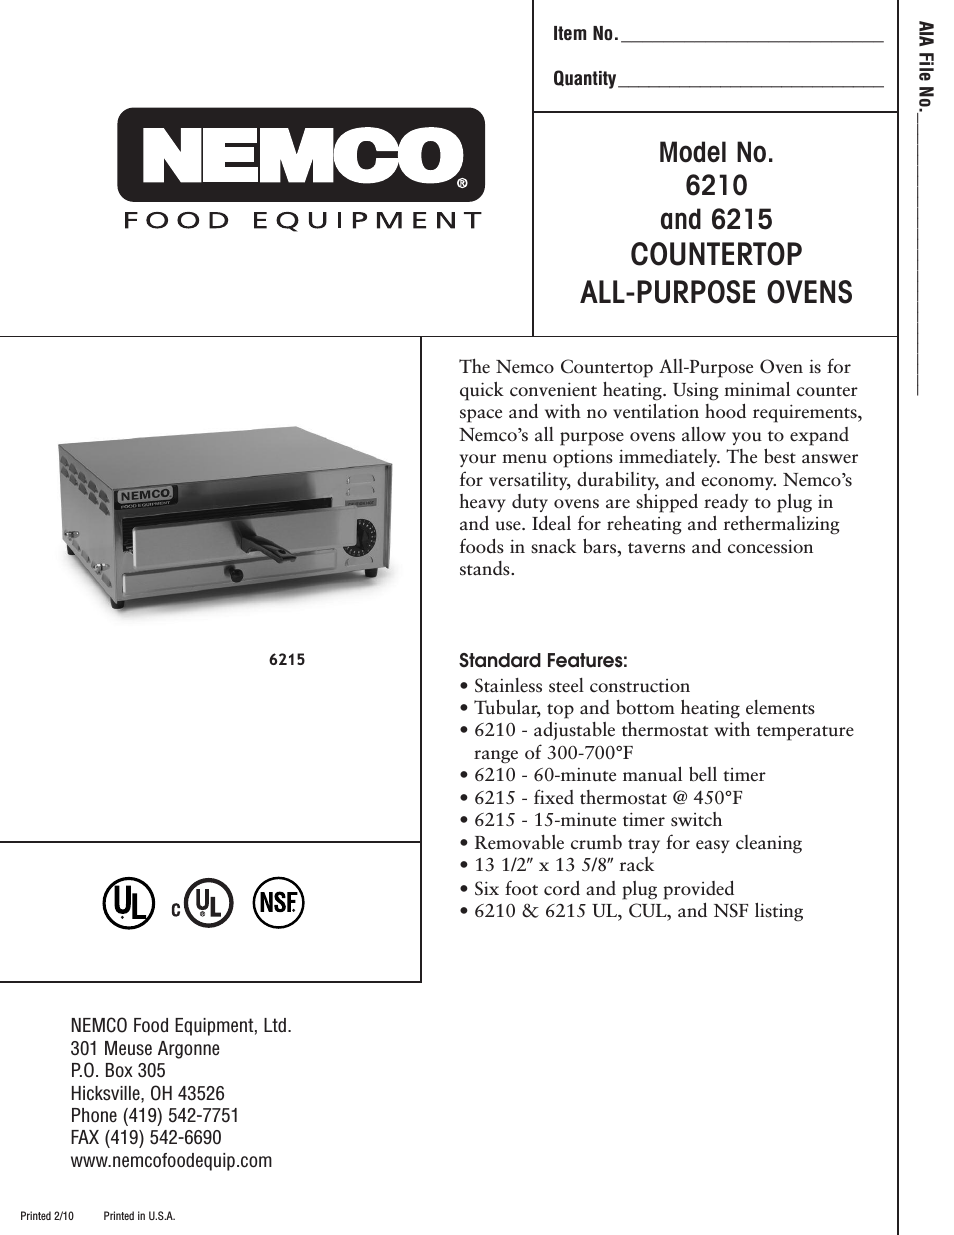 Countertop Ovens - Spec Sheet